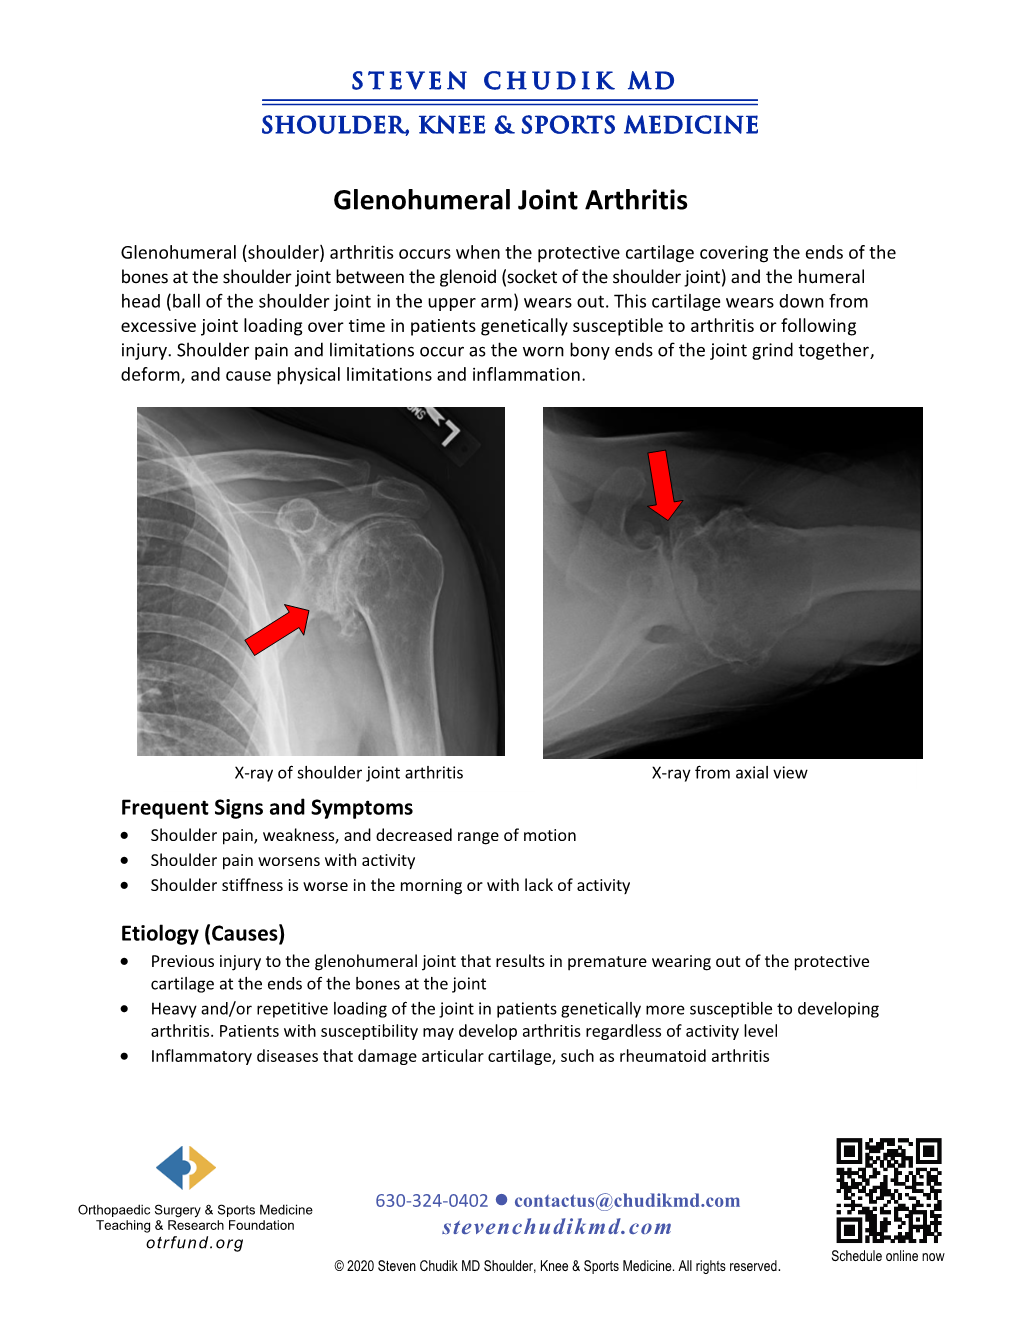 Glenohumeral Shoulder Joint Arthritis - DocsLib